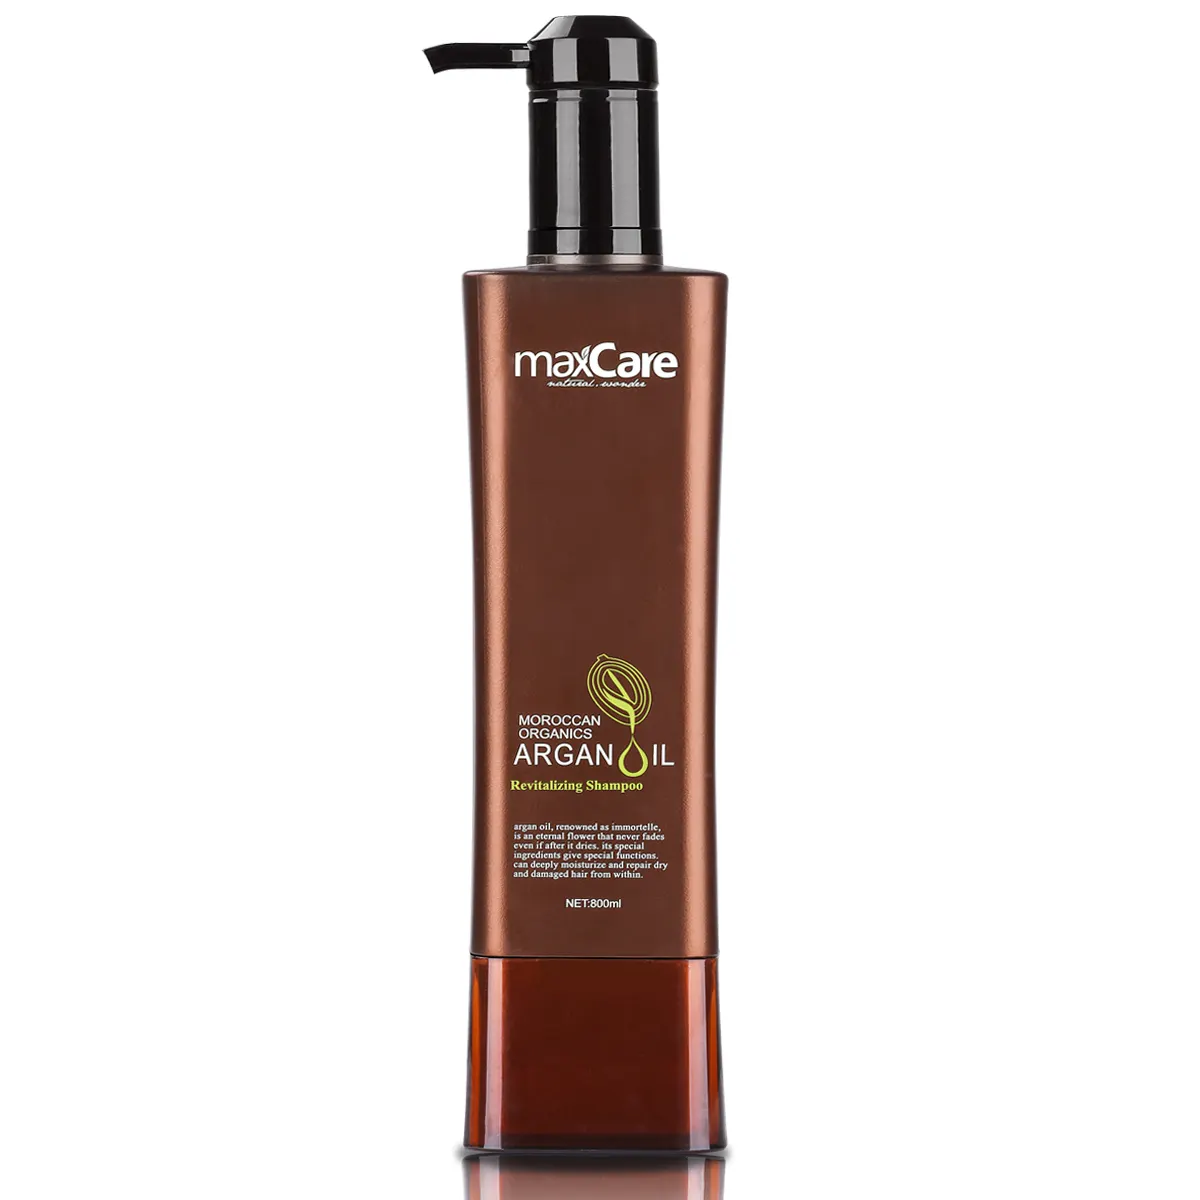 Professional oem Logos champus bio tonic hair conditional rose oil keratin treatment argan oil shampoo